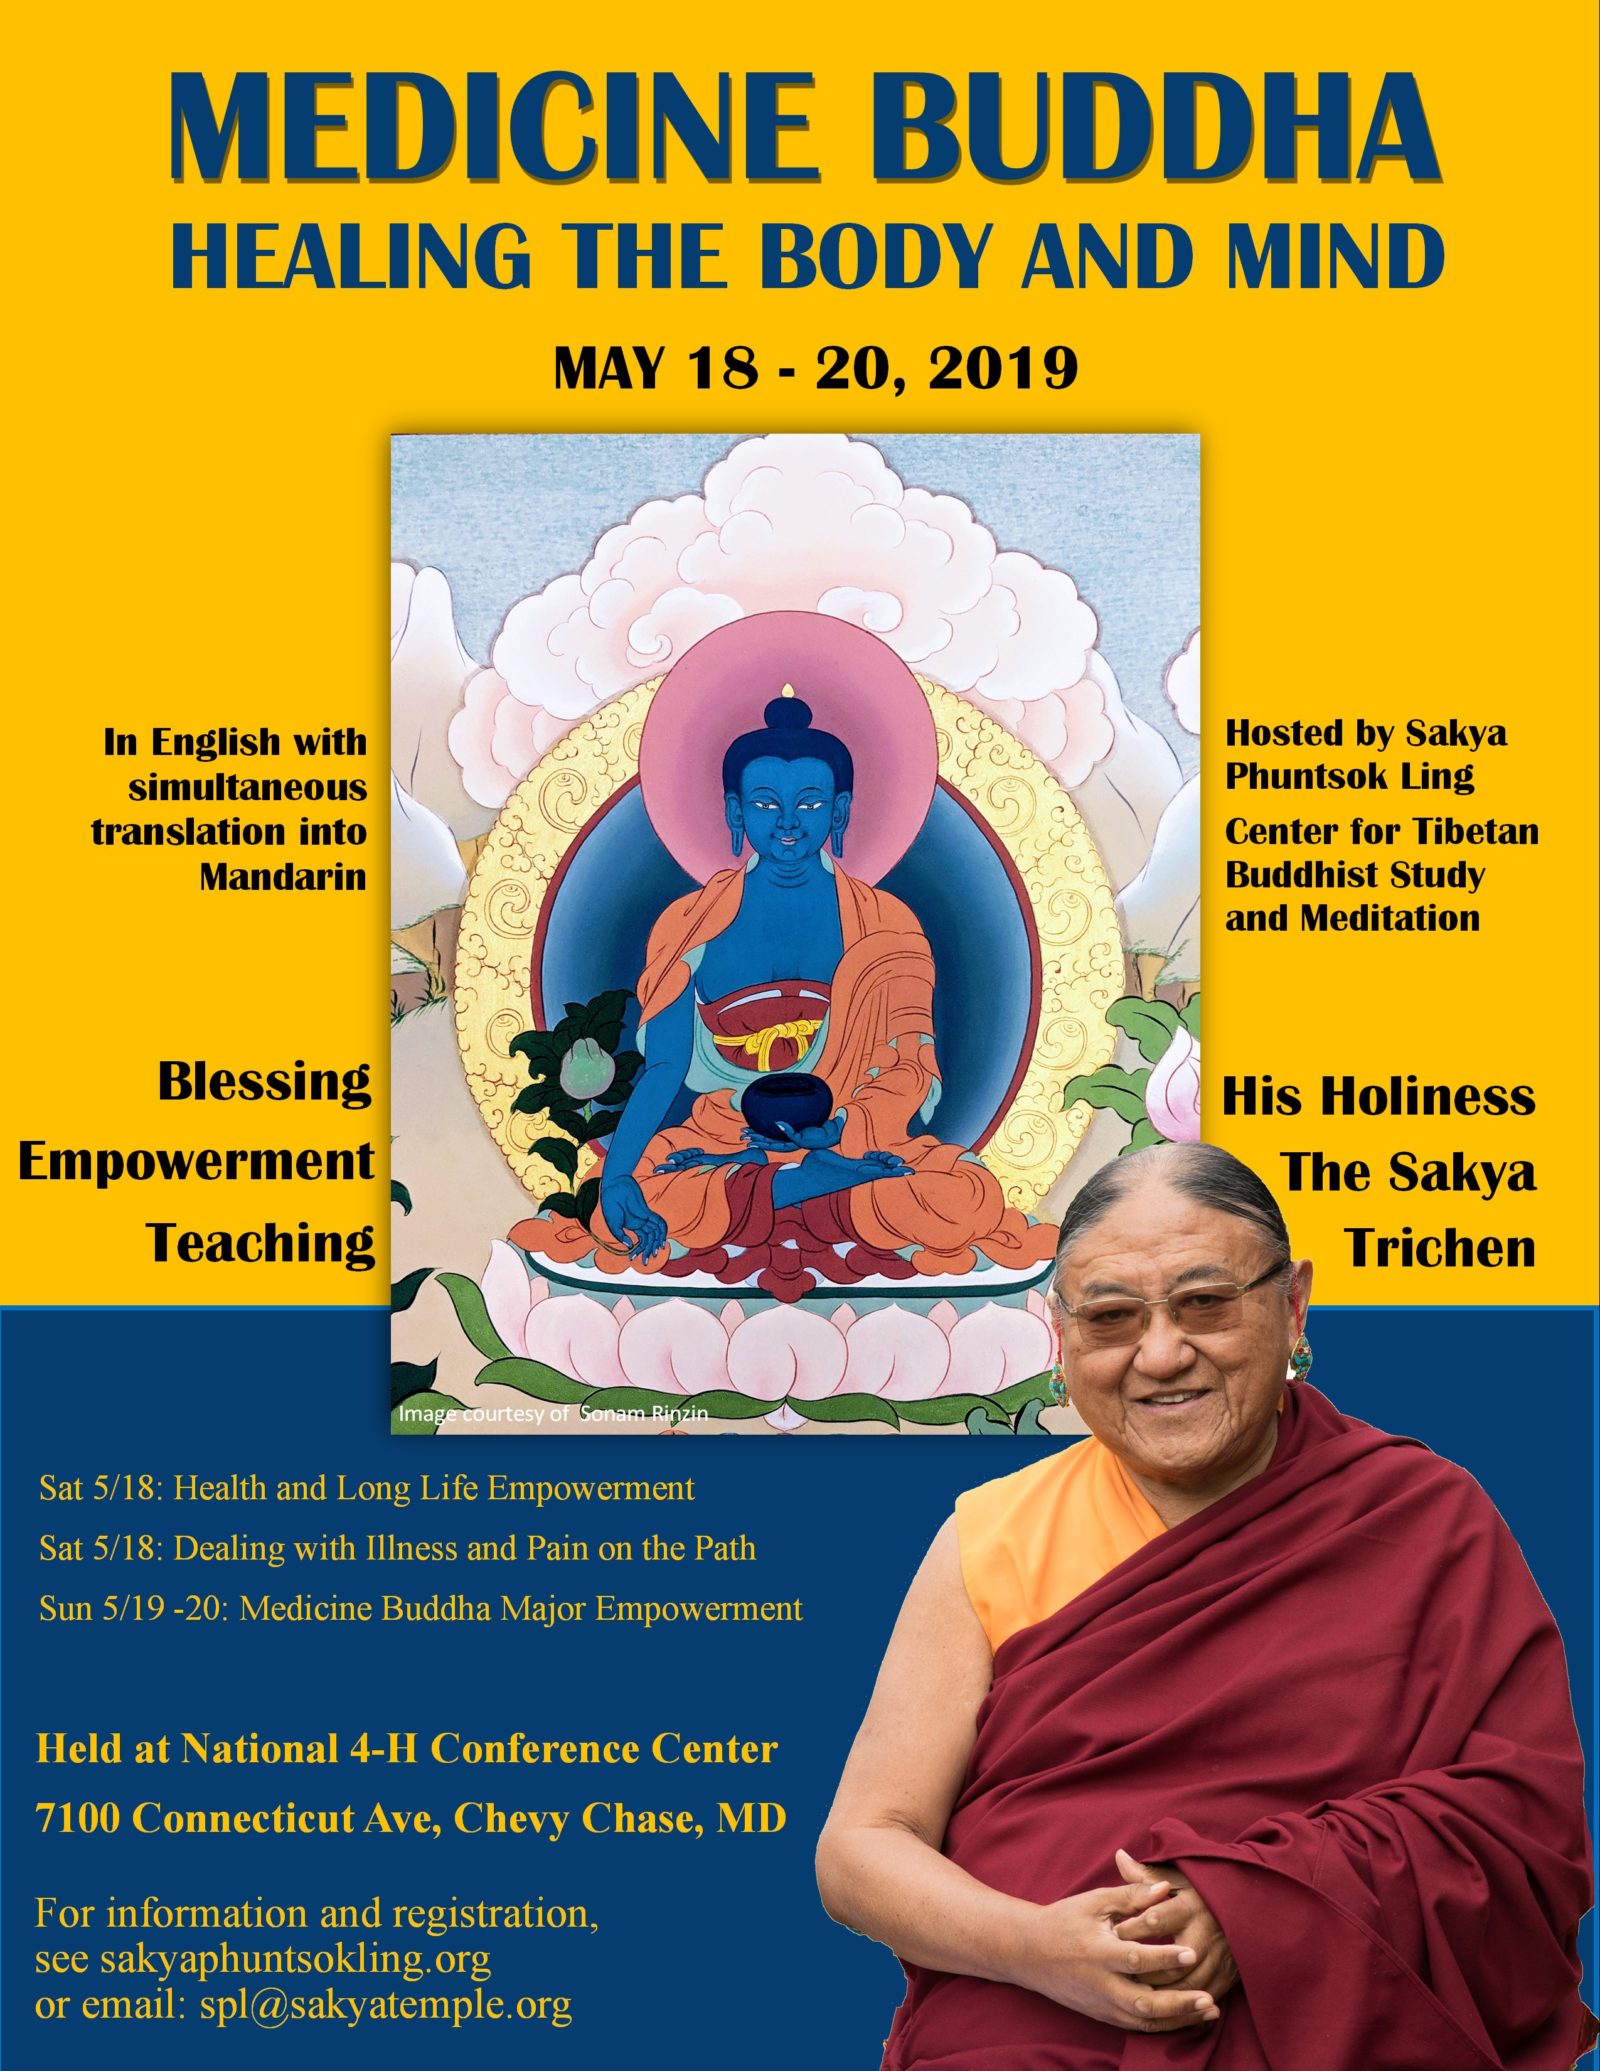 Sakya Phuntsok Ling – Center for Tibetan Buddhist Study and Meditation